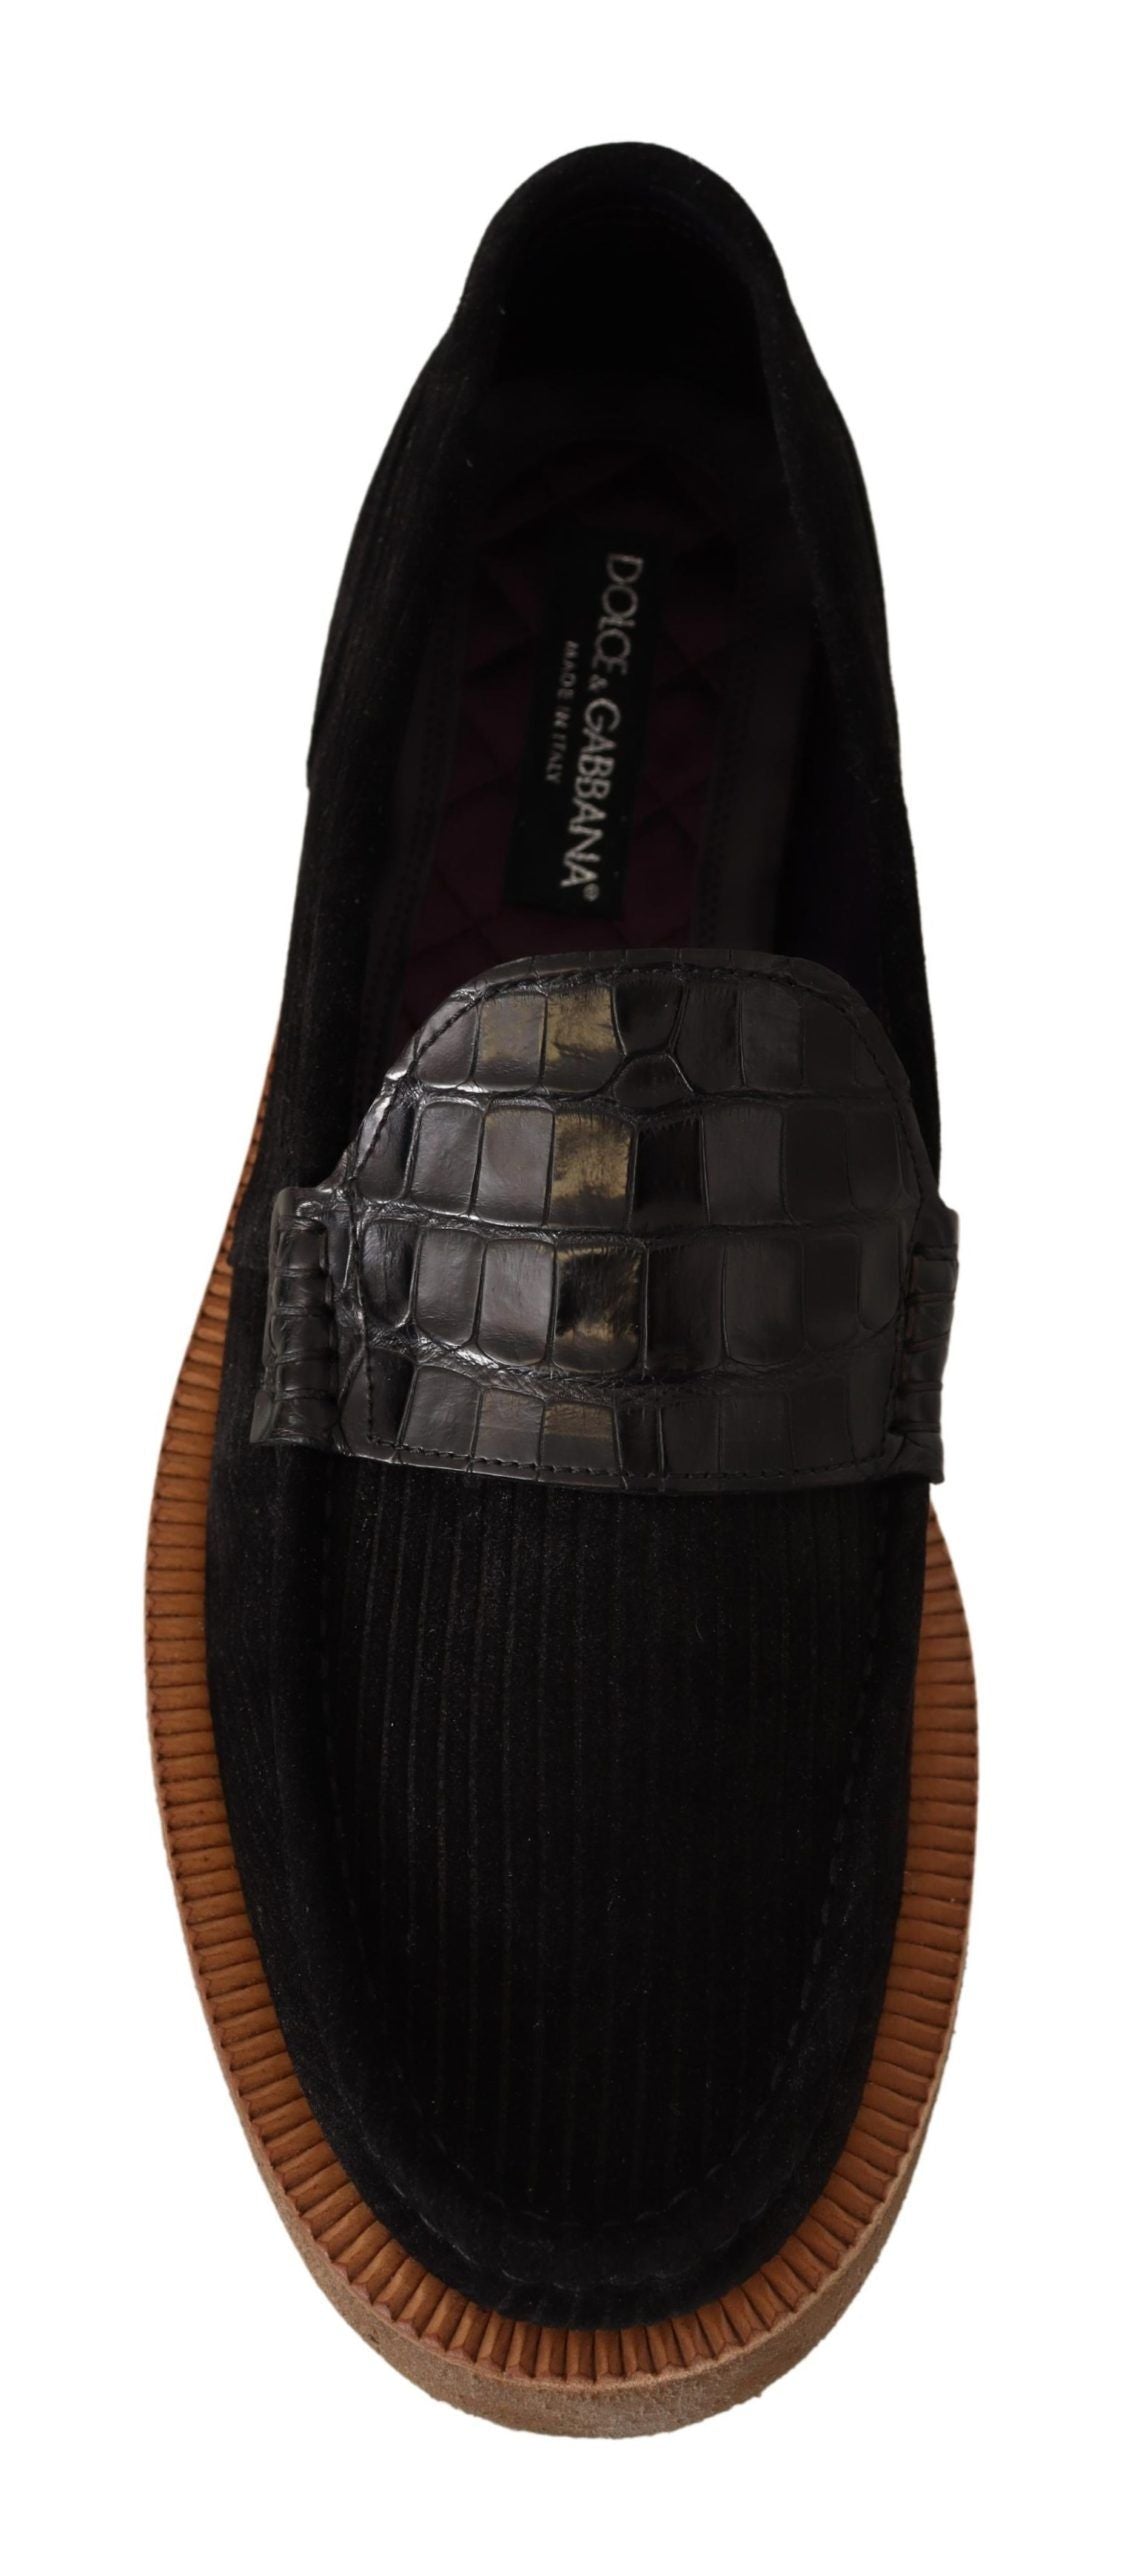 Dolce & Gabbana Black Fox Leather Moccasins Loafer Scarpe